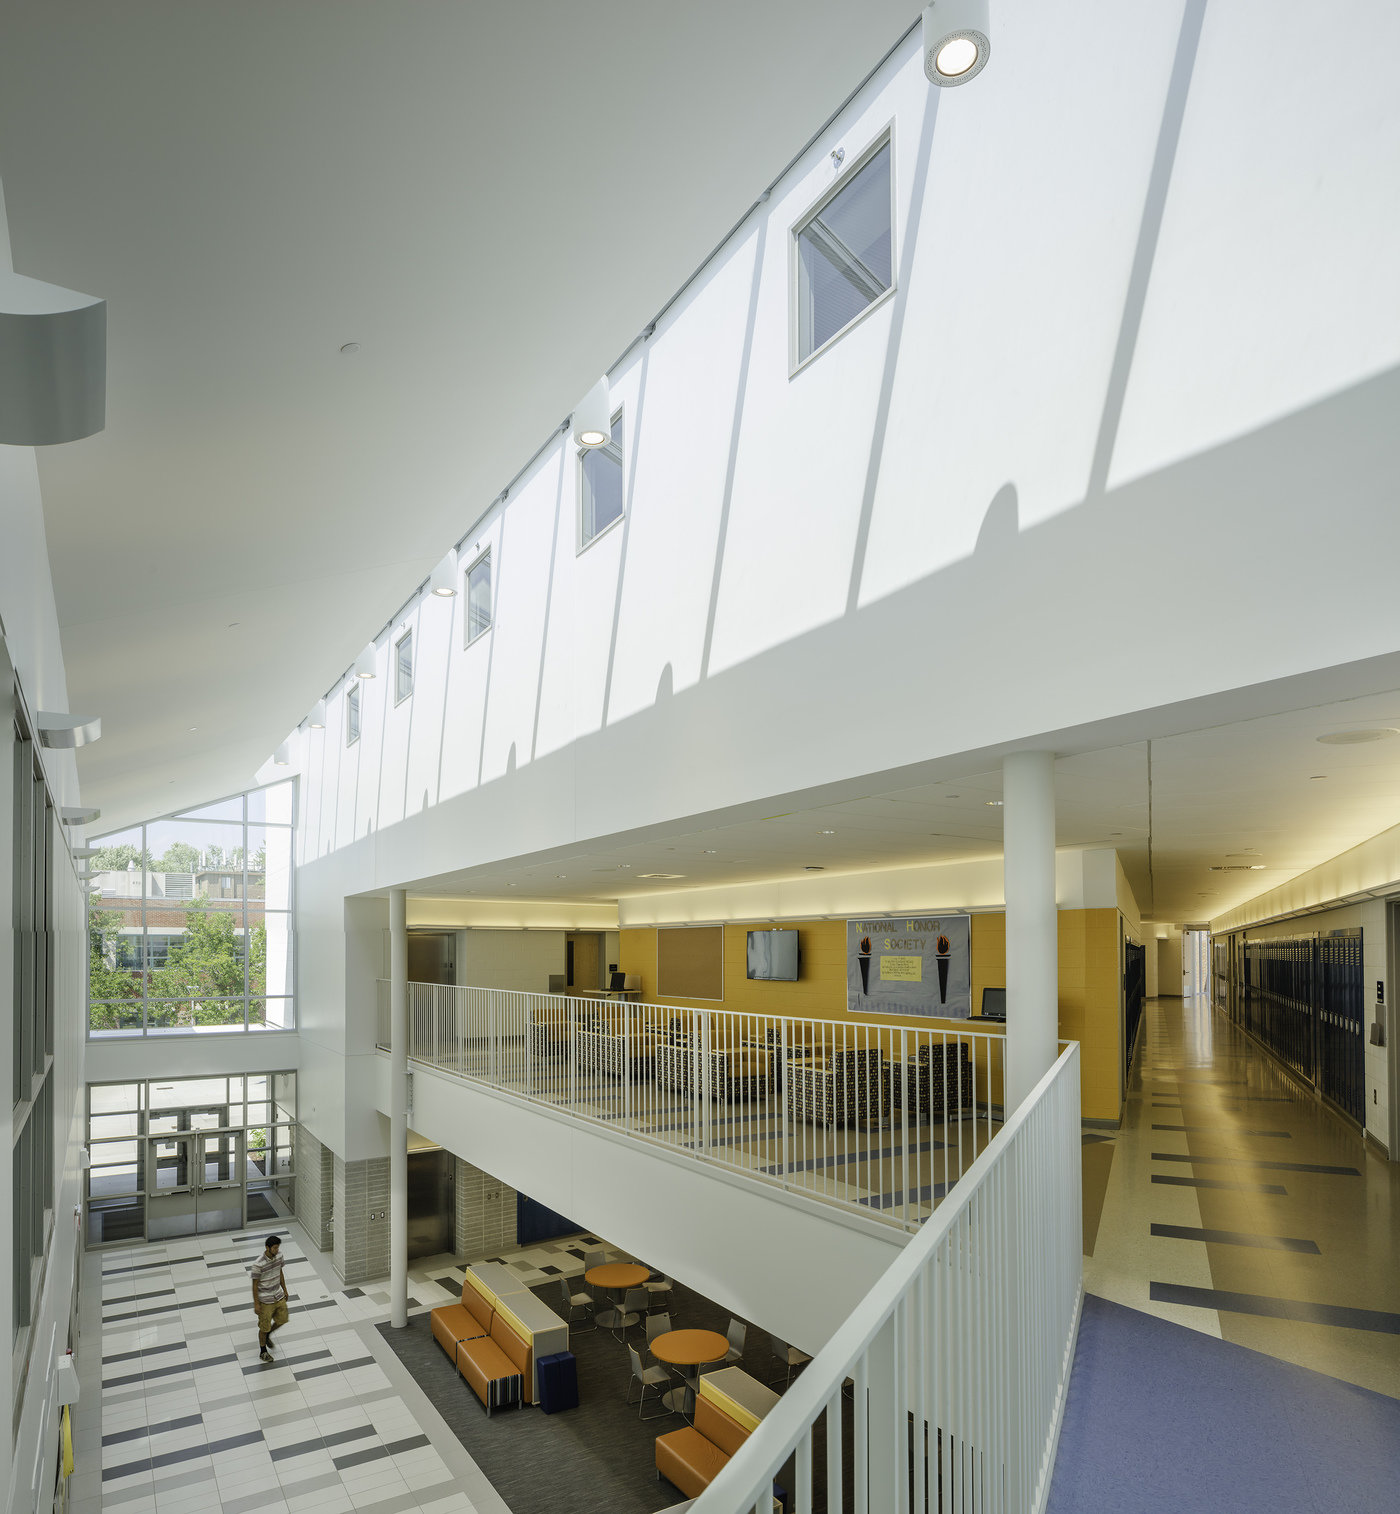 6 tskp hartford magnet trinity college academy interior view entrance halls upper level skylights1 1400 xxx q85